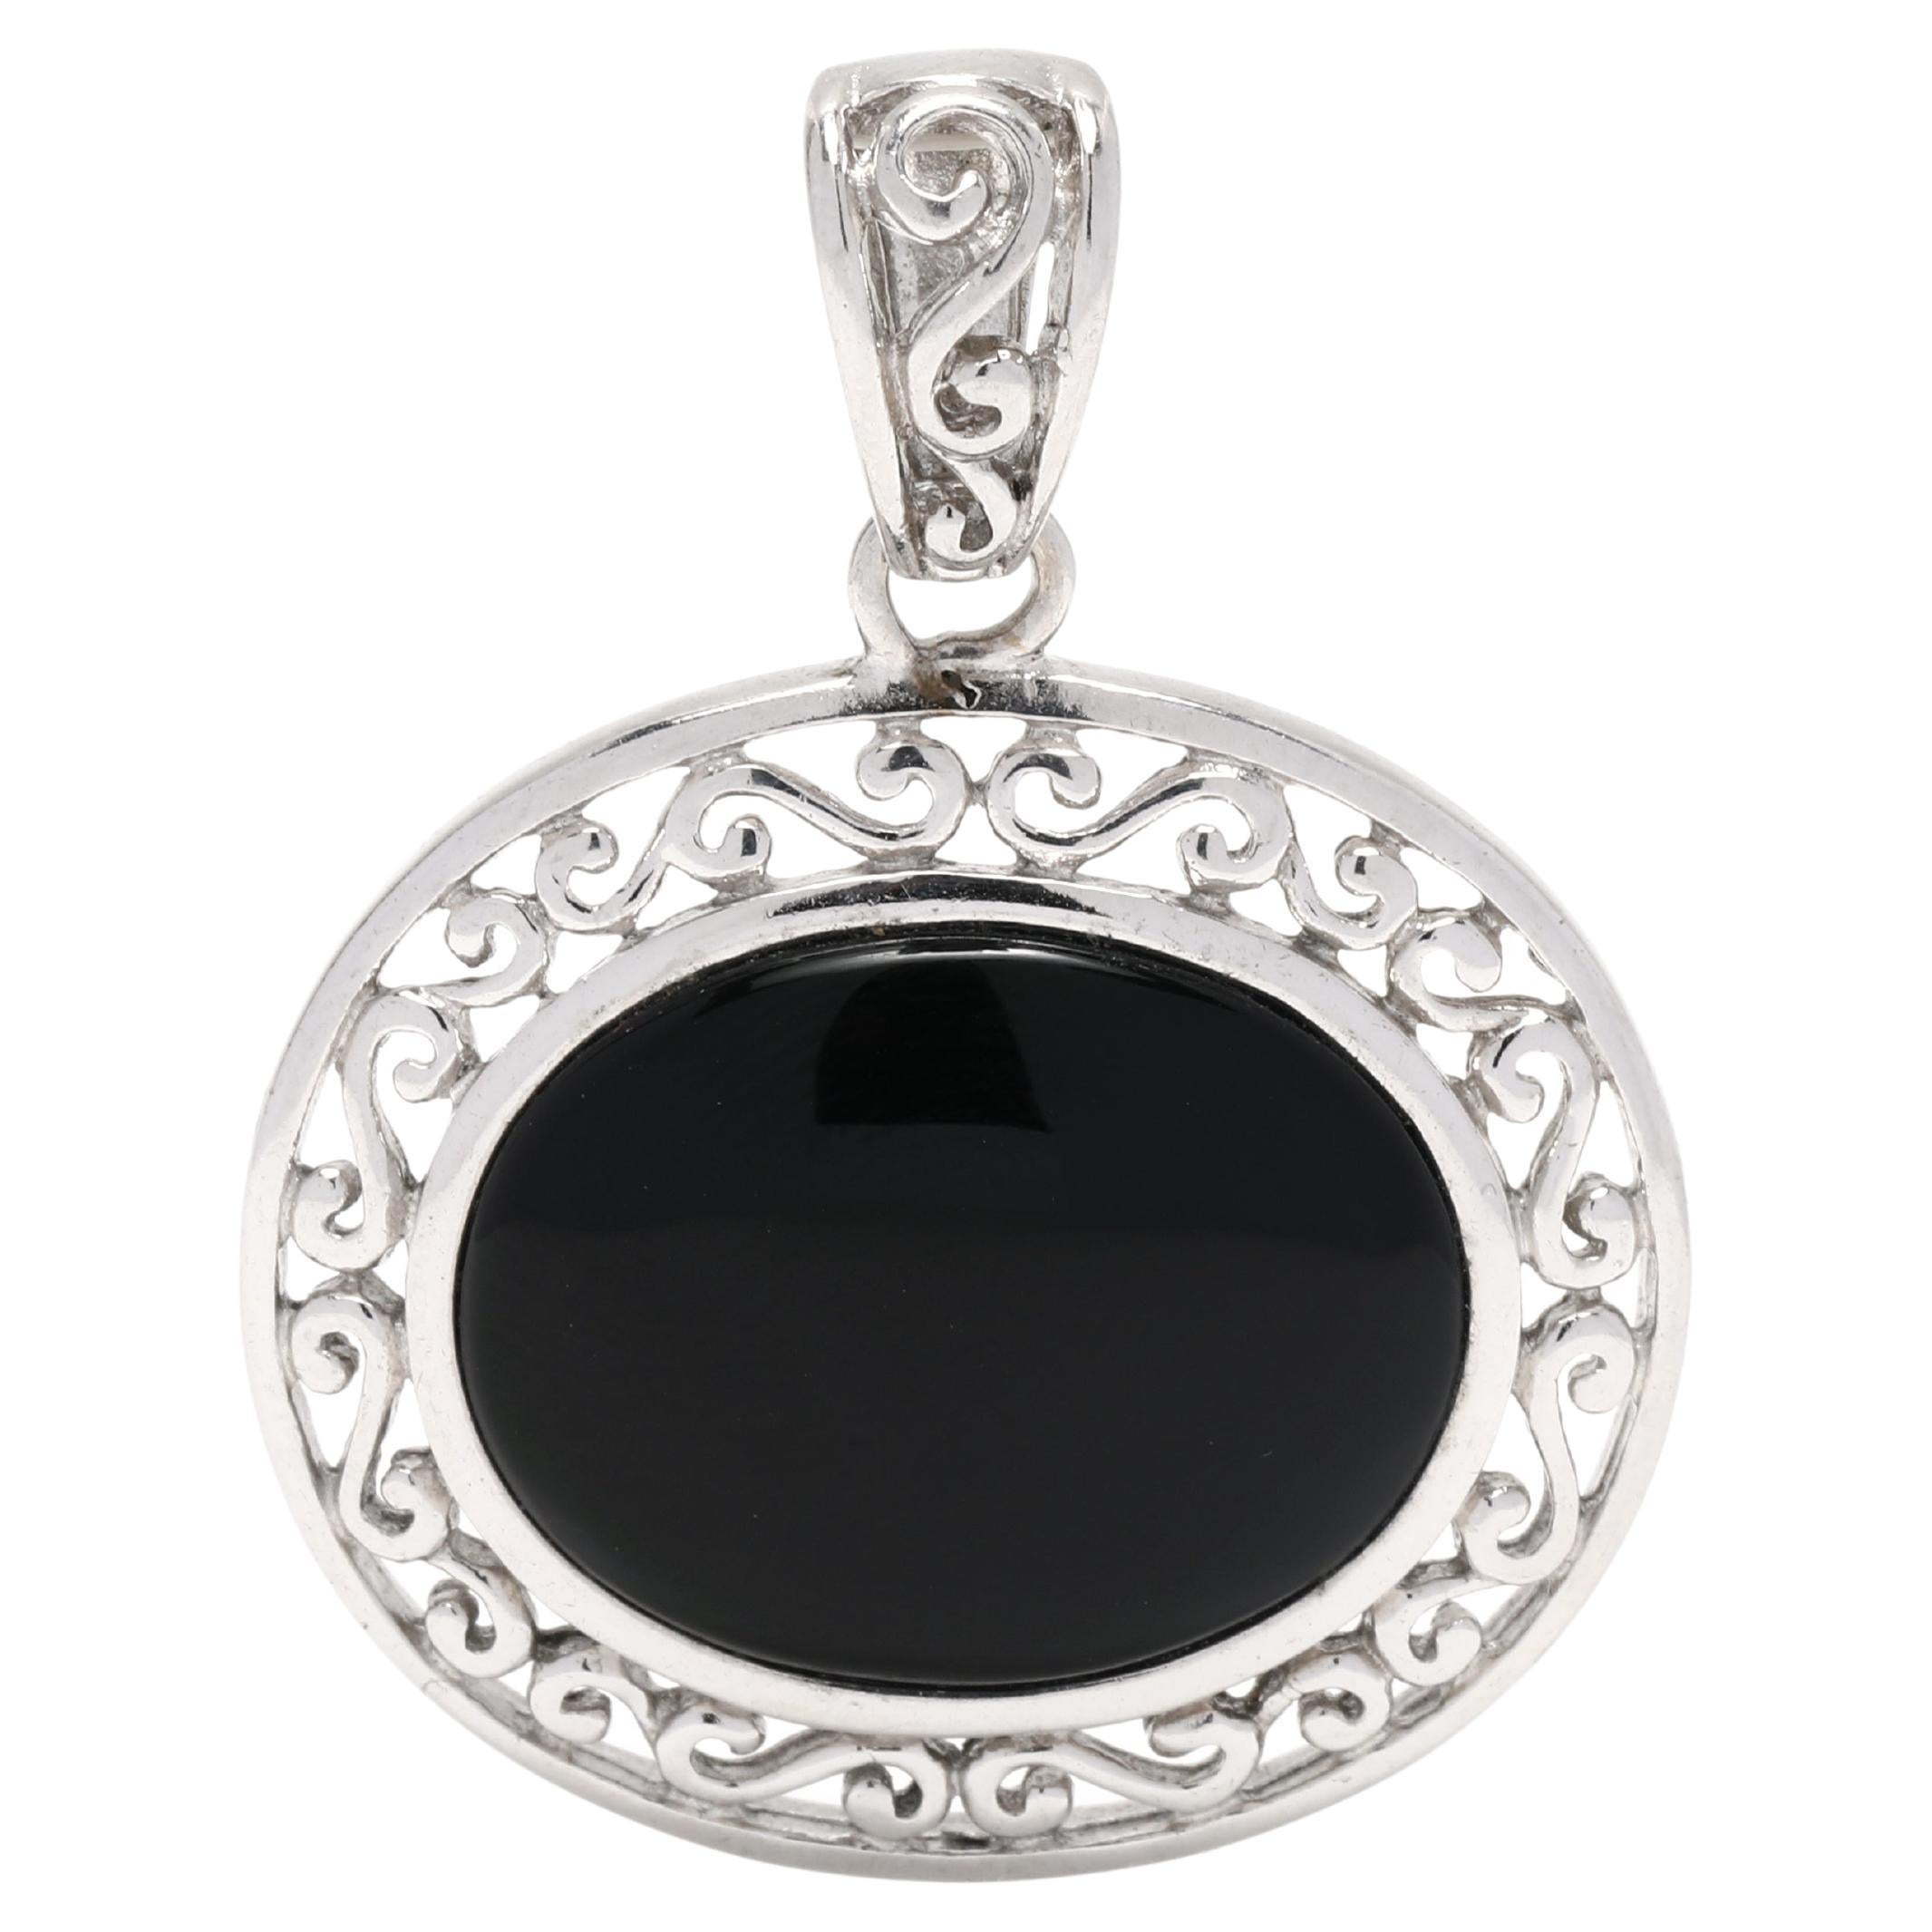 Oval Black Onyx Filigree Pendant, Sterling Silver, Vintage